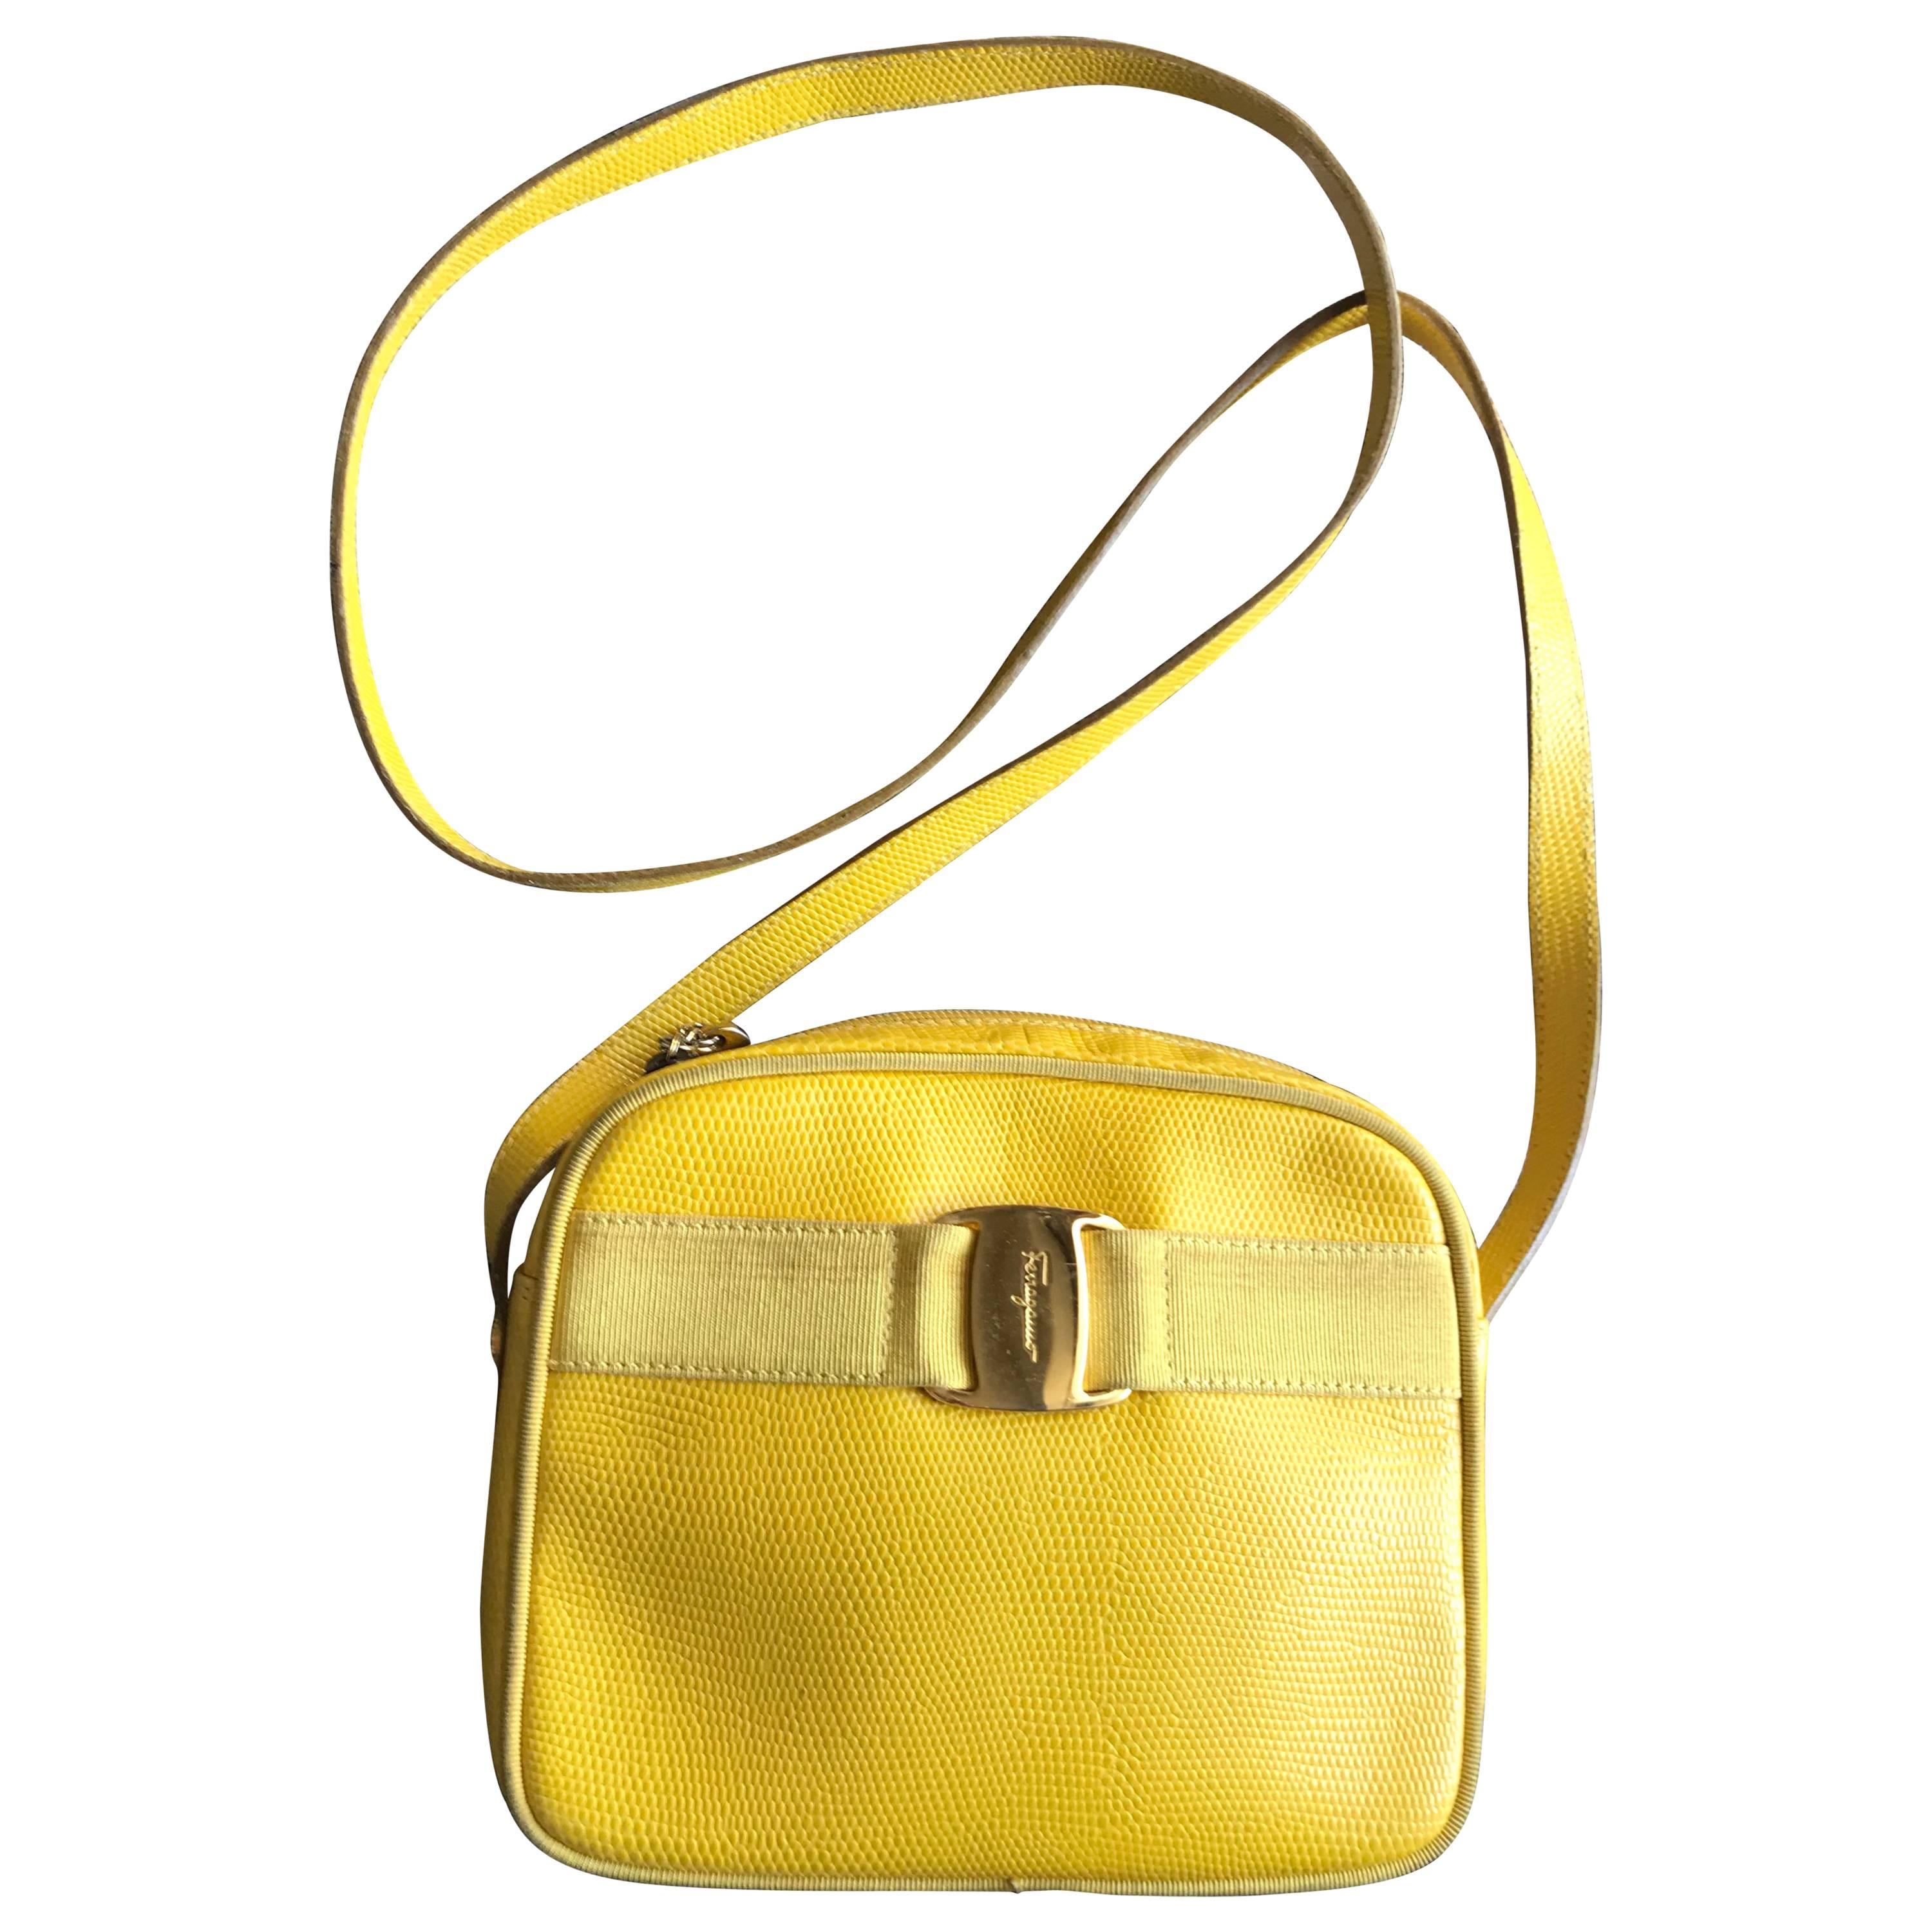 Vintage Salvatore Ferragamo lizard embossed yellow leather shoulder bag. Vara For Sale